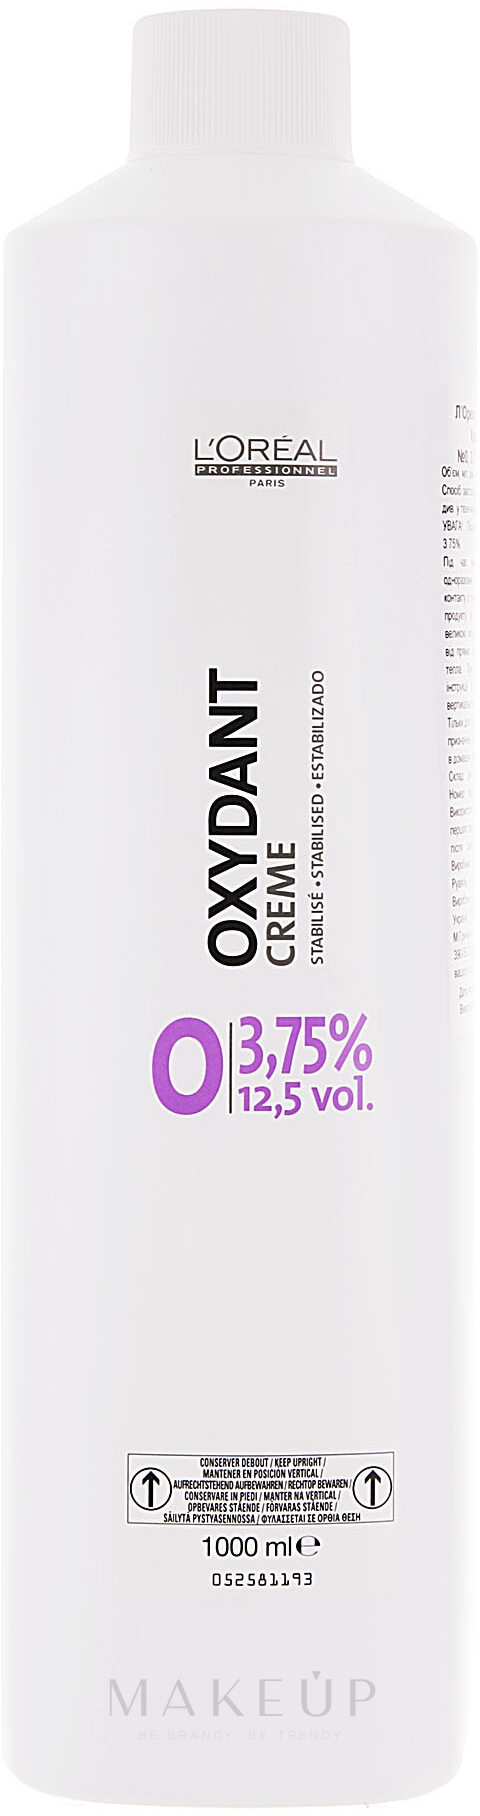 Oxidationscreme - L'Oreal Professionnel Oxydant №0 3.75% — Bild 1000 ml